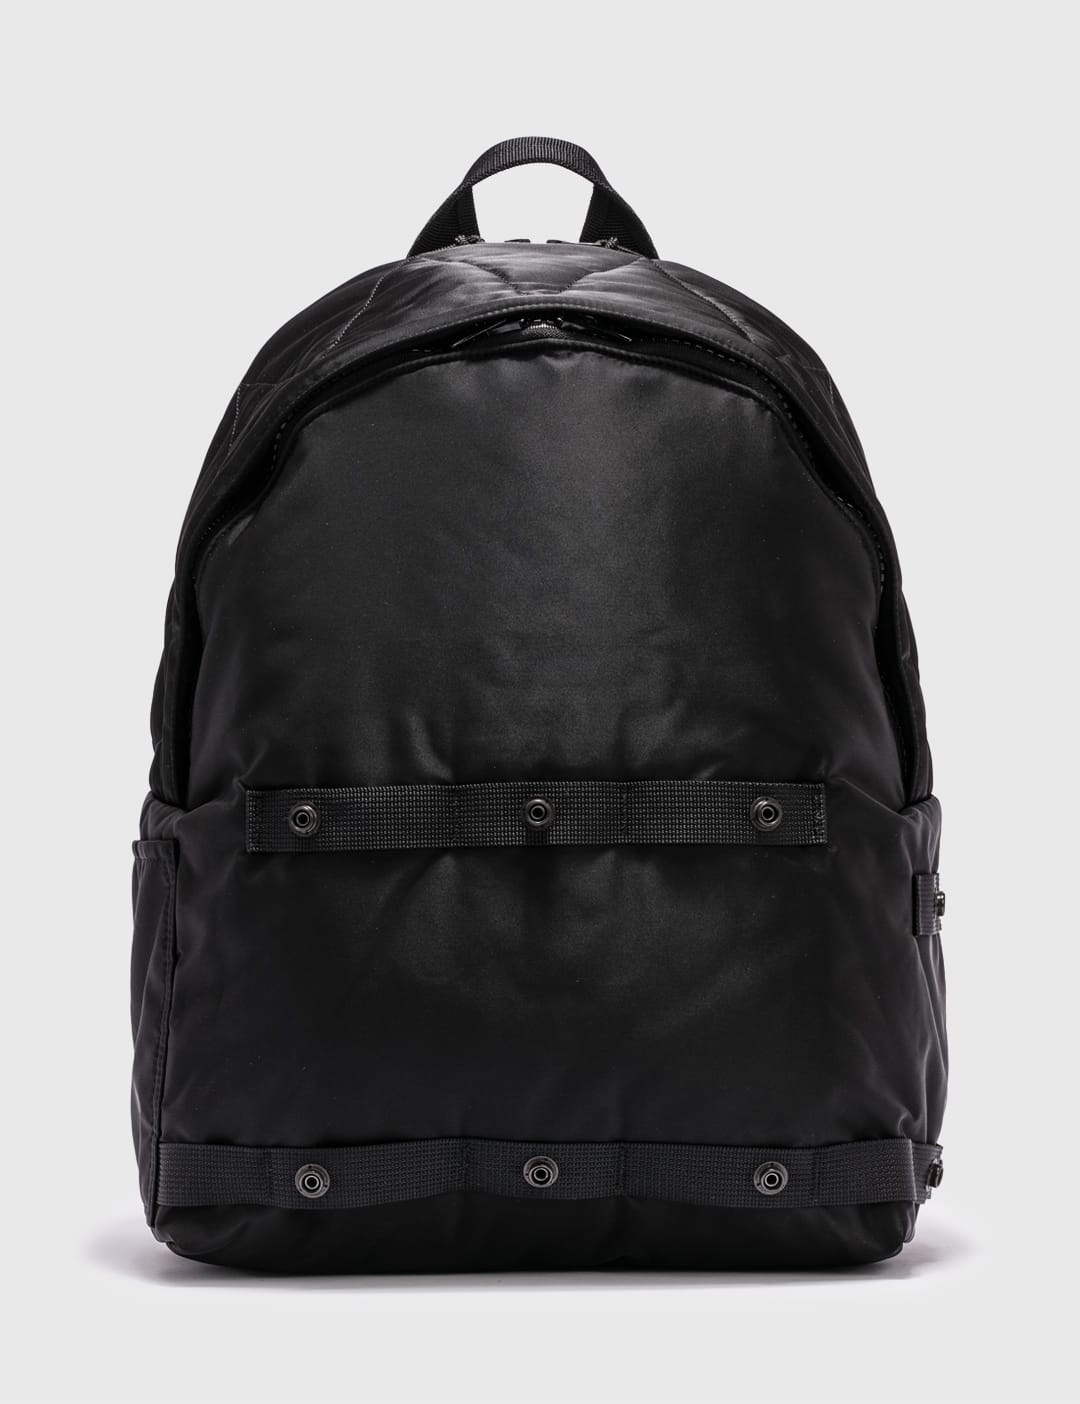 Sacai - Sacai x Porter Tactical Backpack | HBX - Globally Curated 